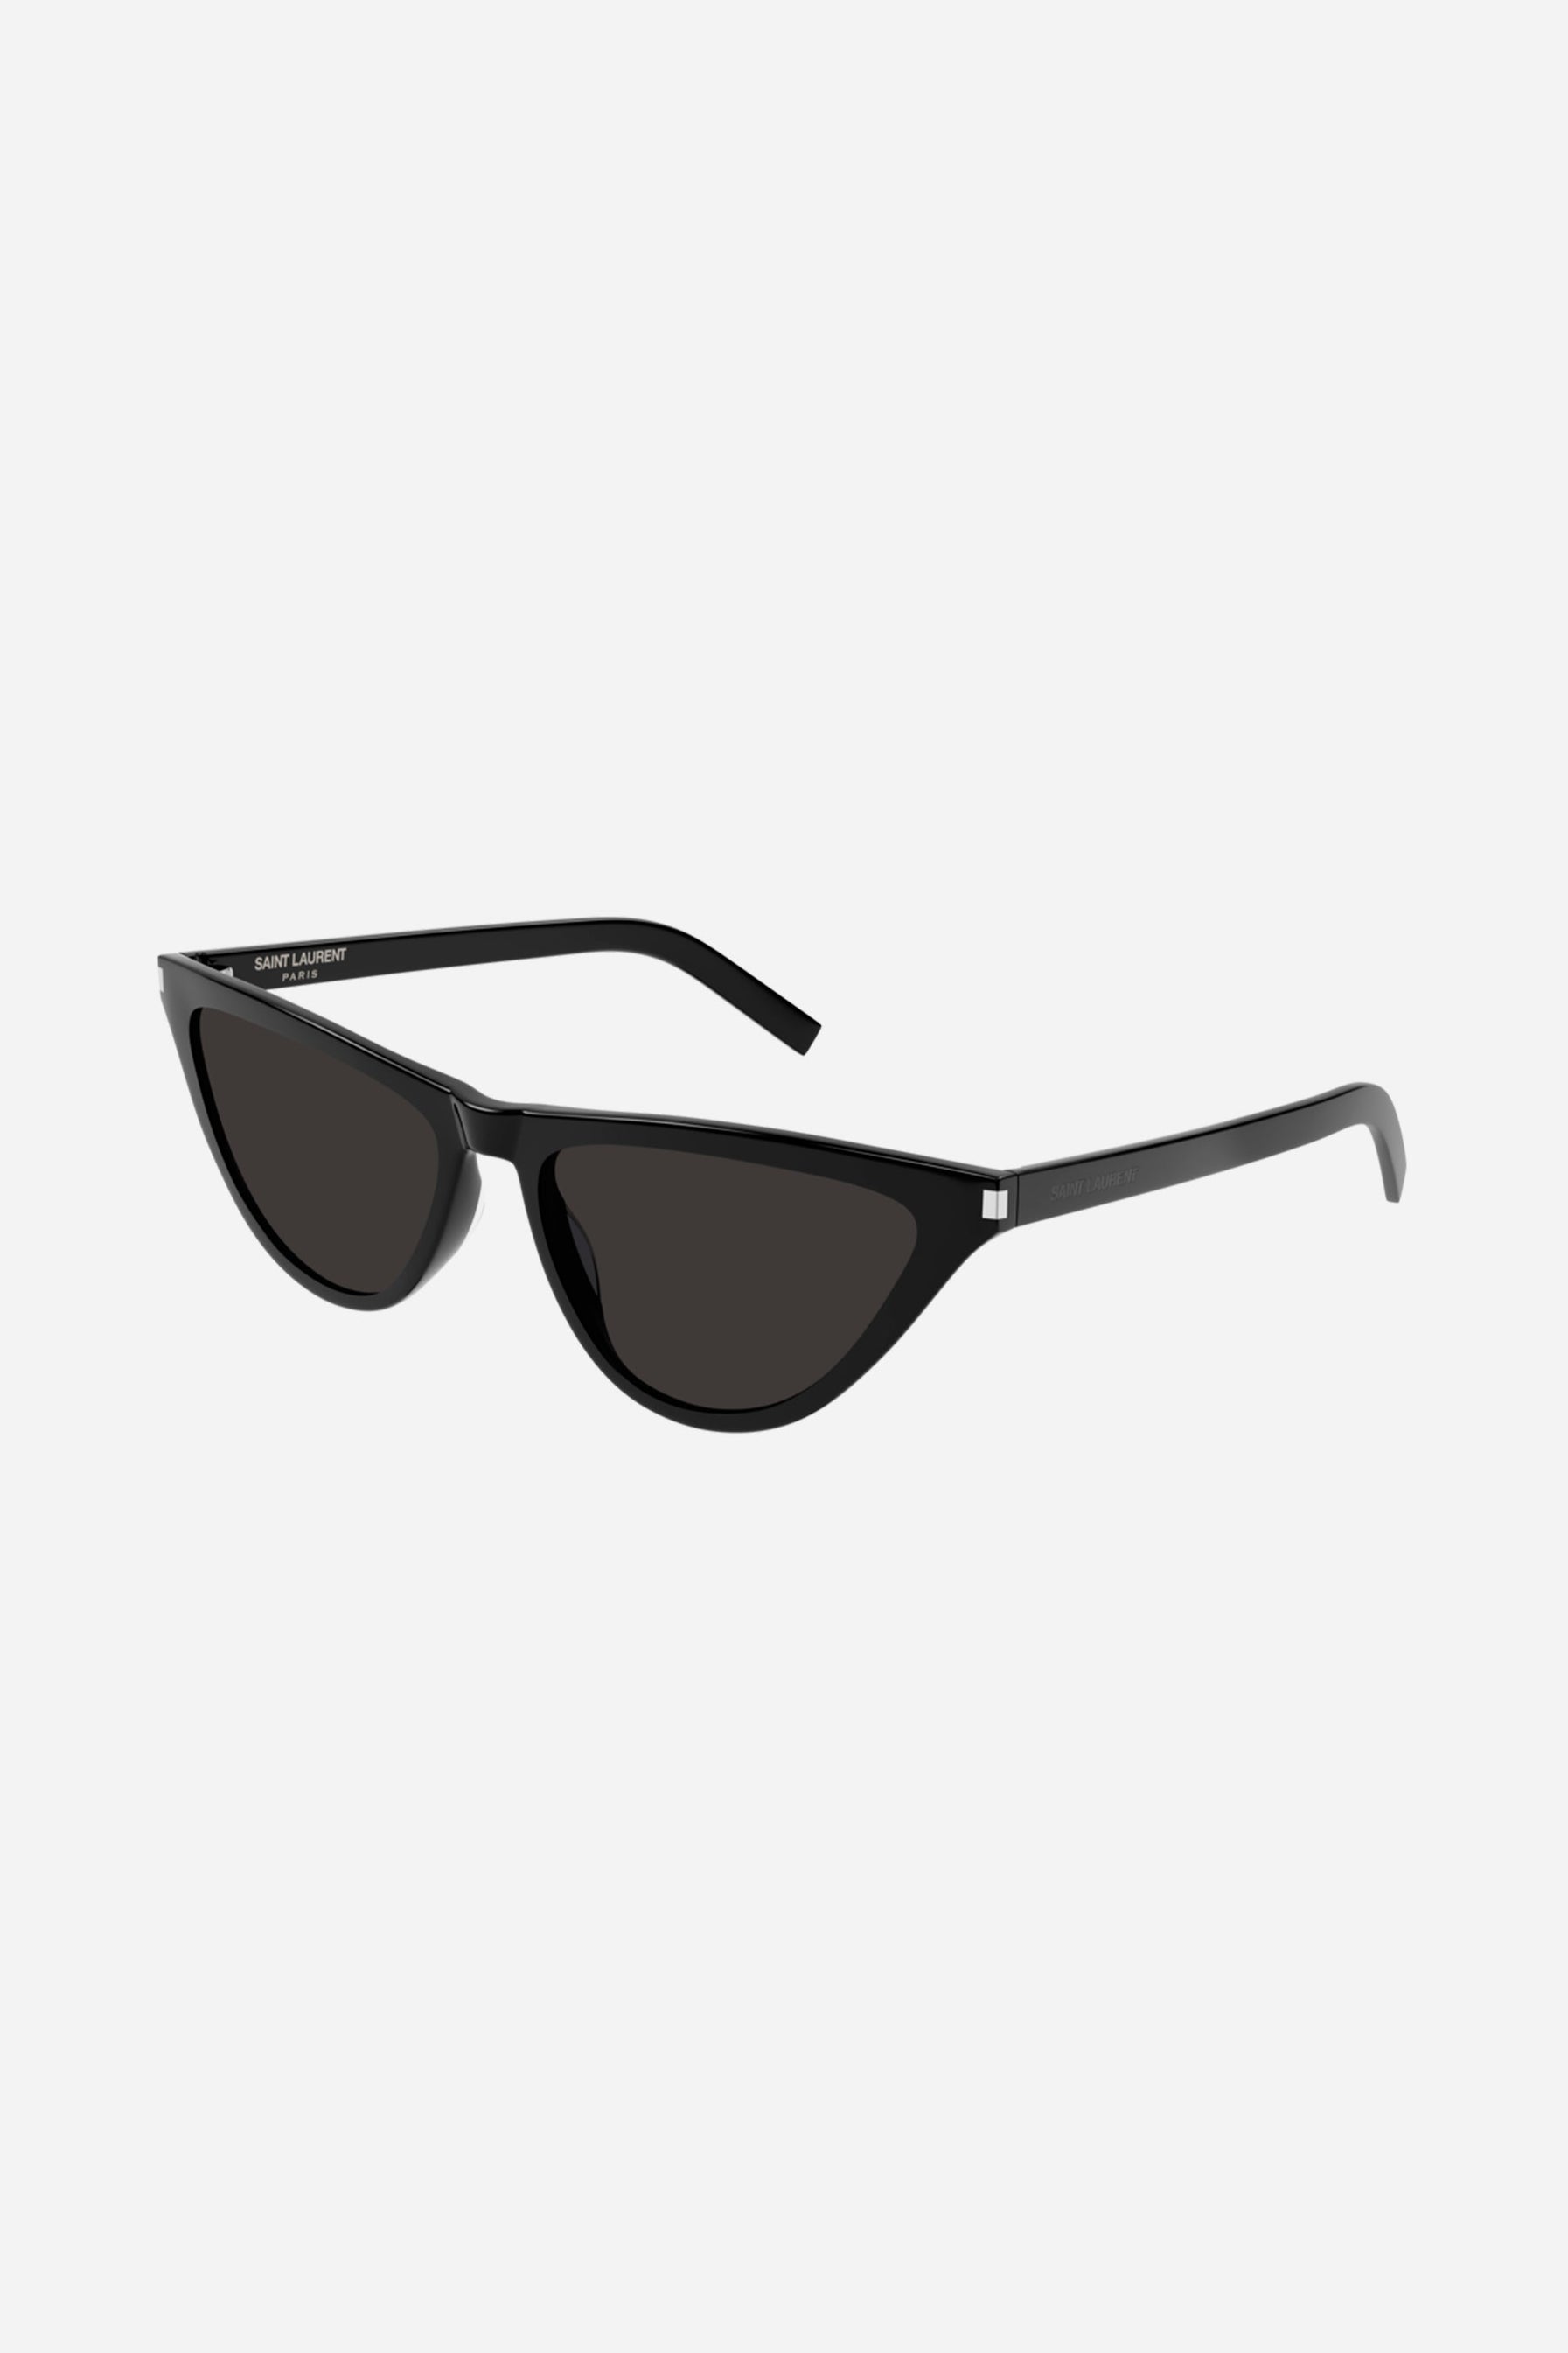 Saint Laurent cat eye black slim sunglasses - Eyewear Club